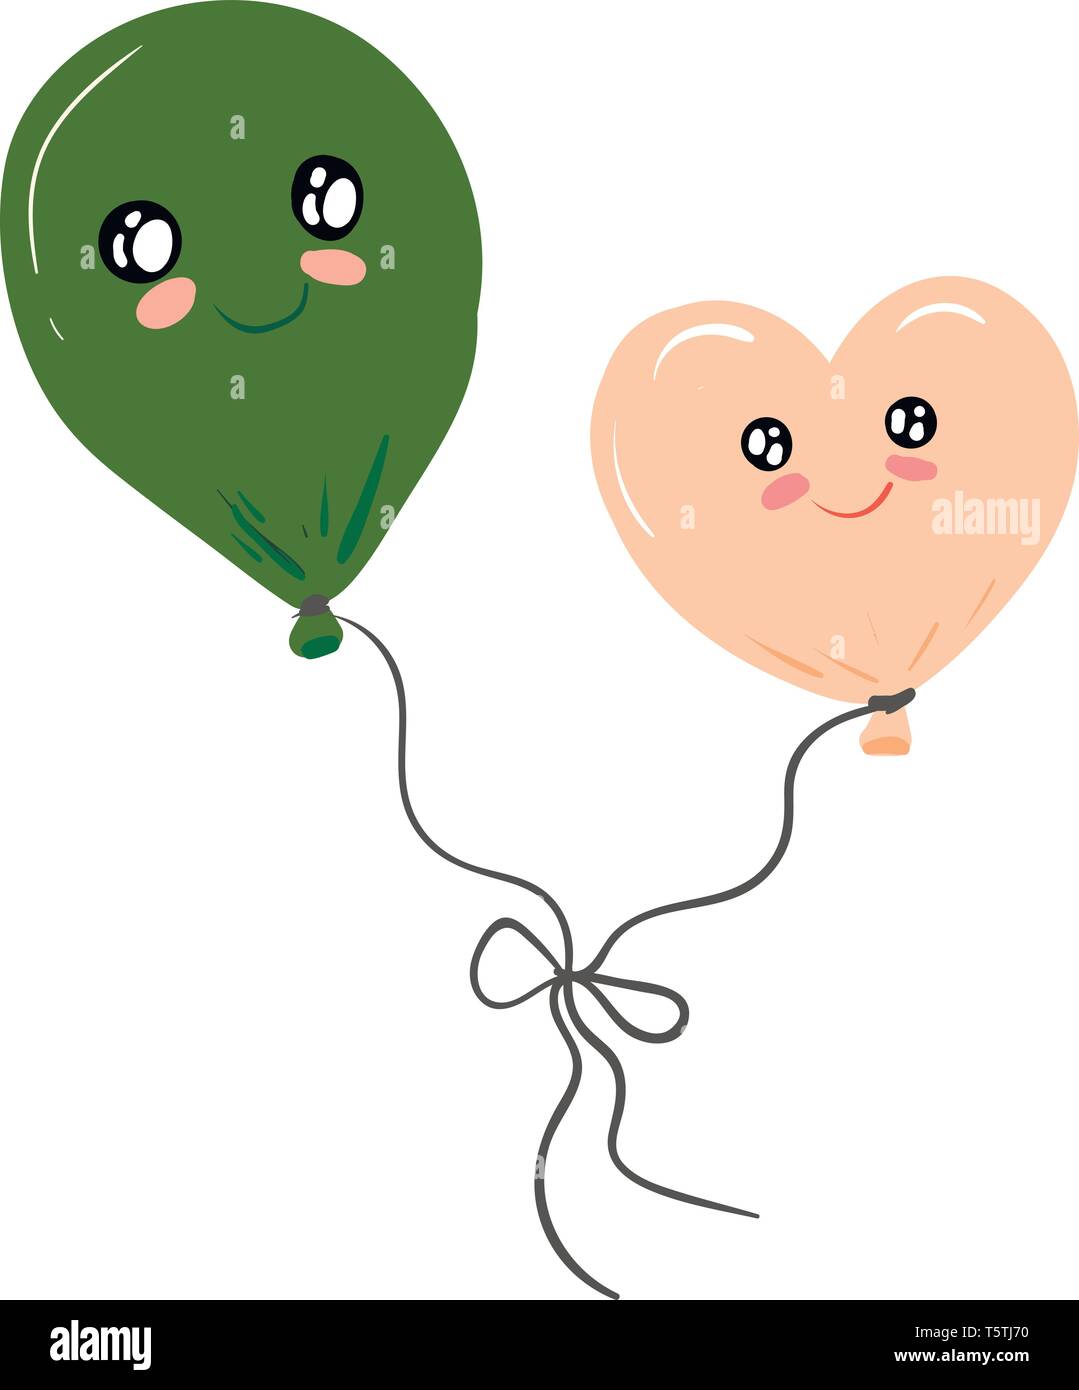 Zwei Ballons gebunden zusammen Vektor- oder Farbe Abbildung: Stock Vektor